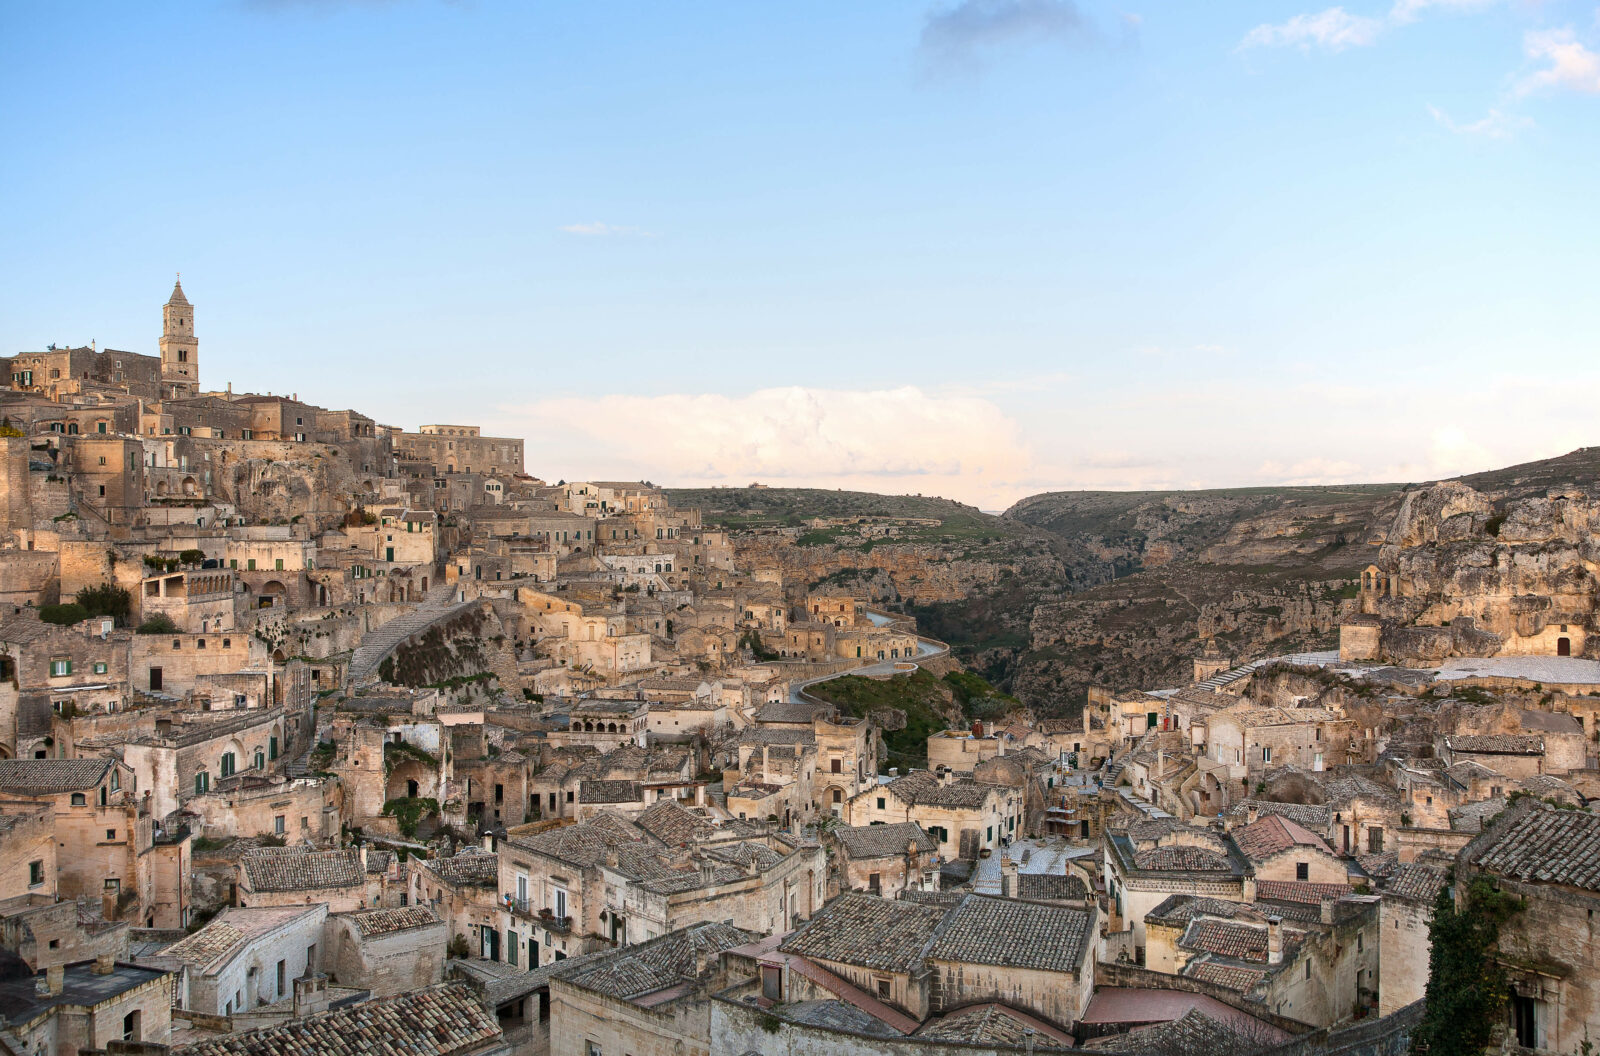 View of Matera